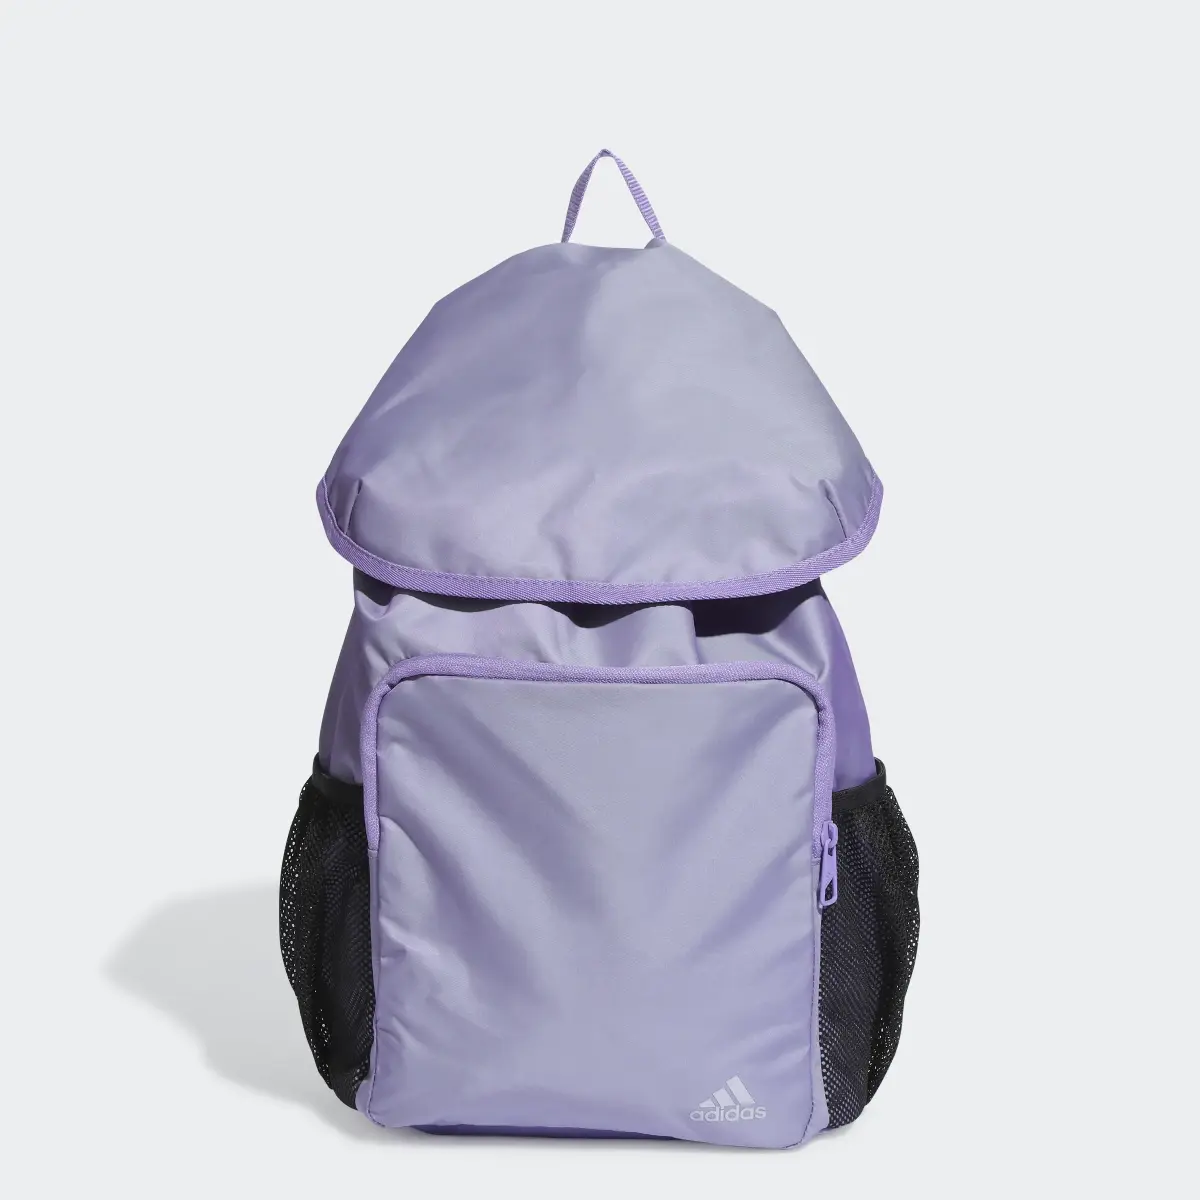 Adidas Dance Backpack. 1